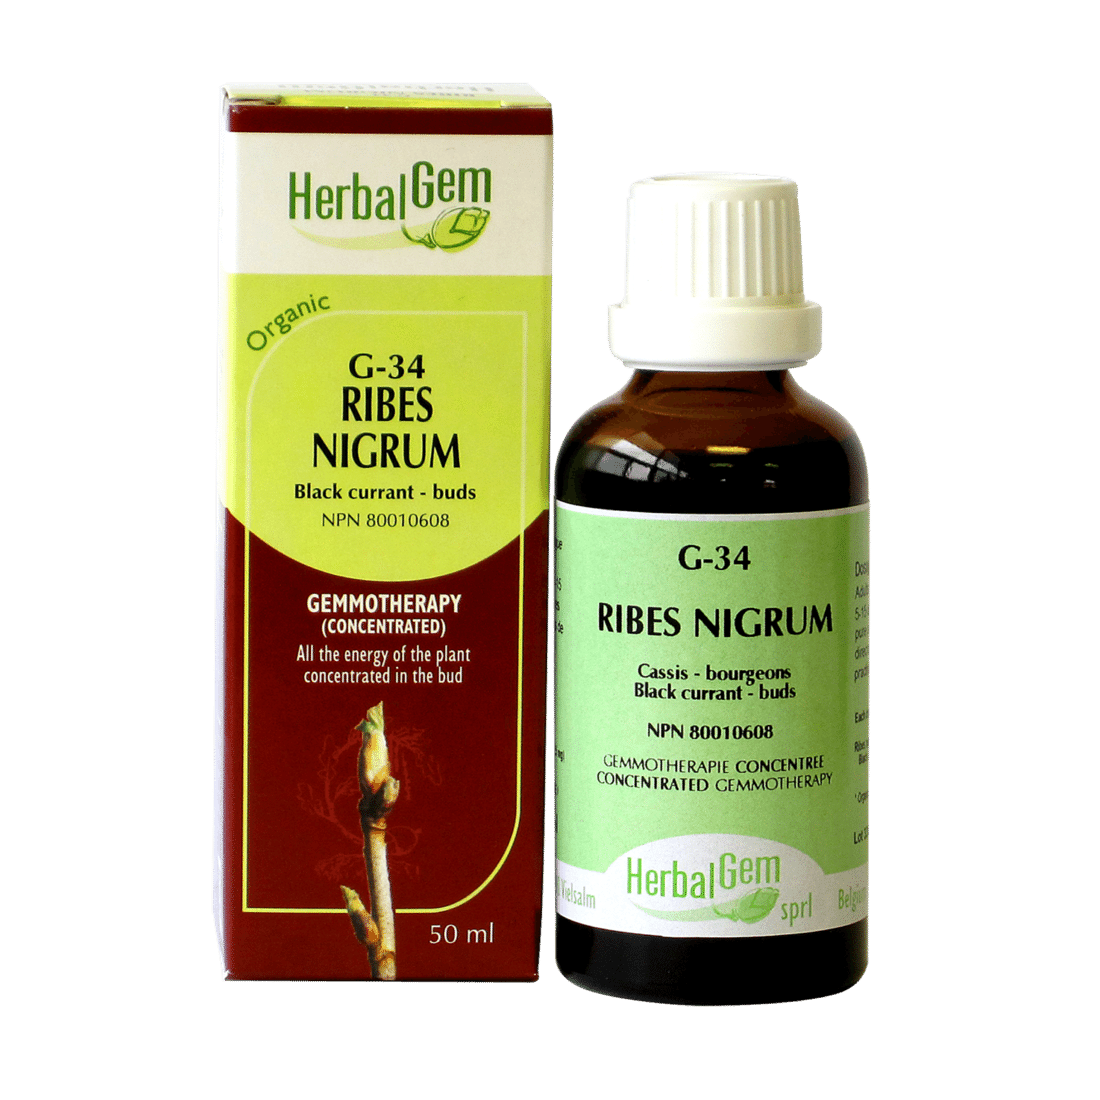 G34 Ribes Nigrum, Black Currant Buds, Gemmotherapy Herbalgem